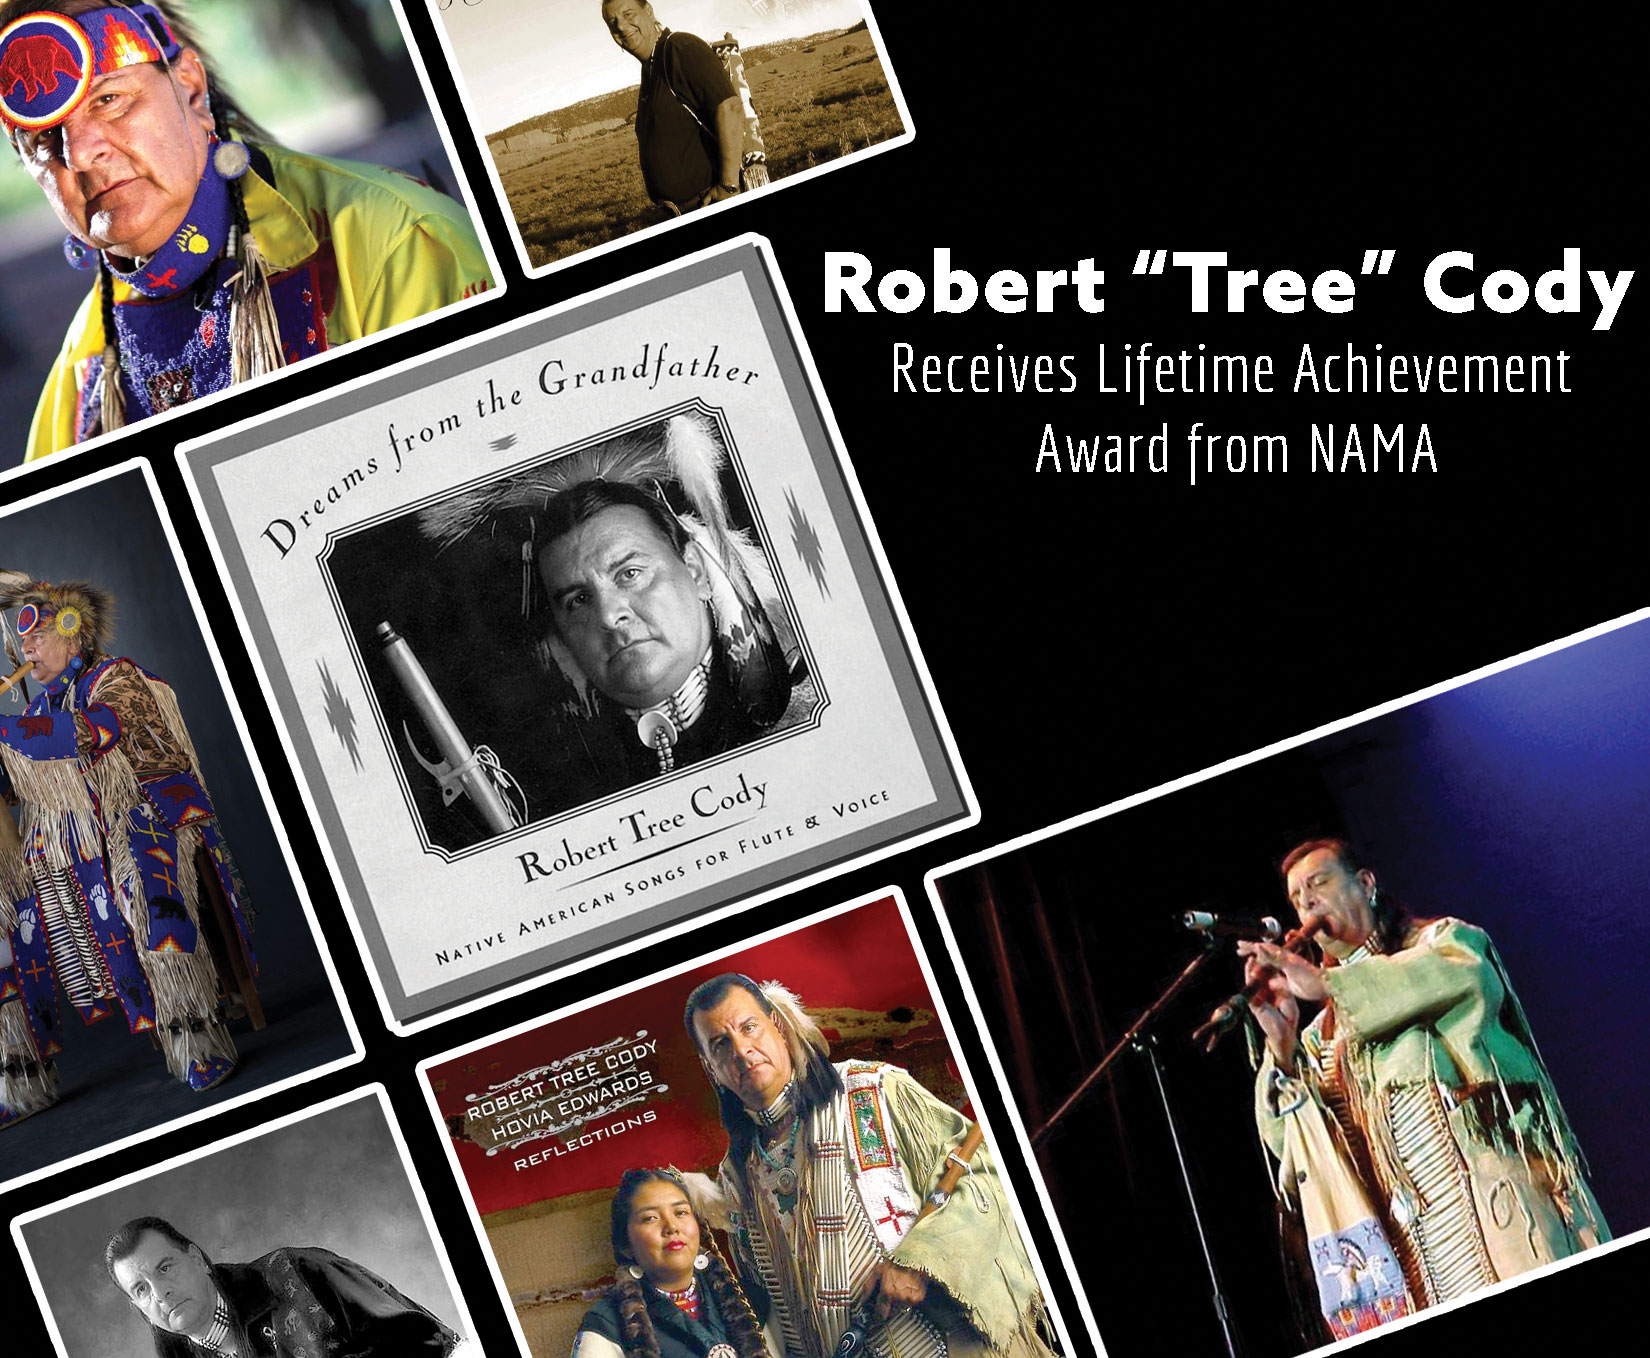 Robert Tree Cody Receives Lifetime Achievement Award from NAMA